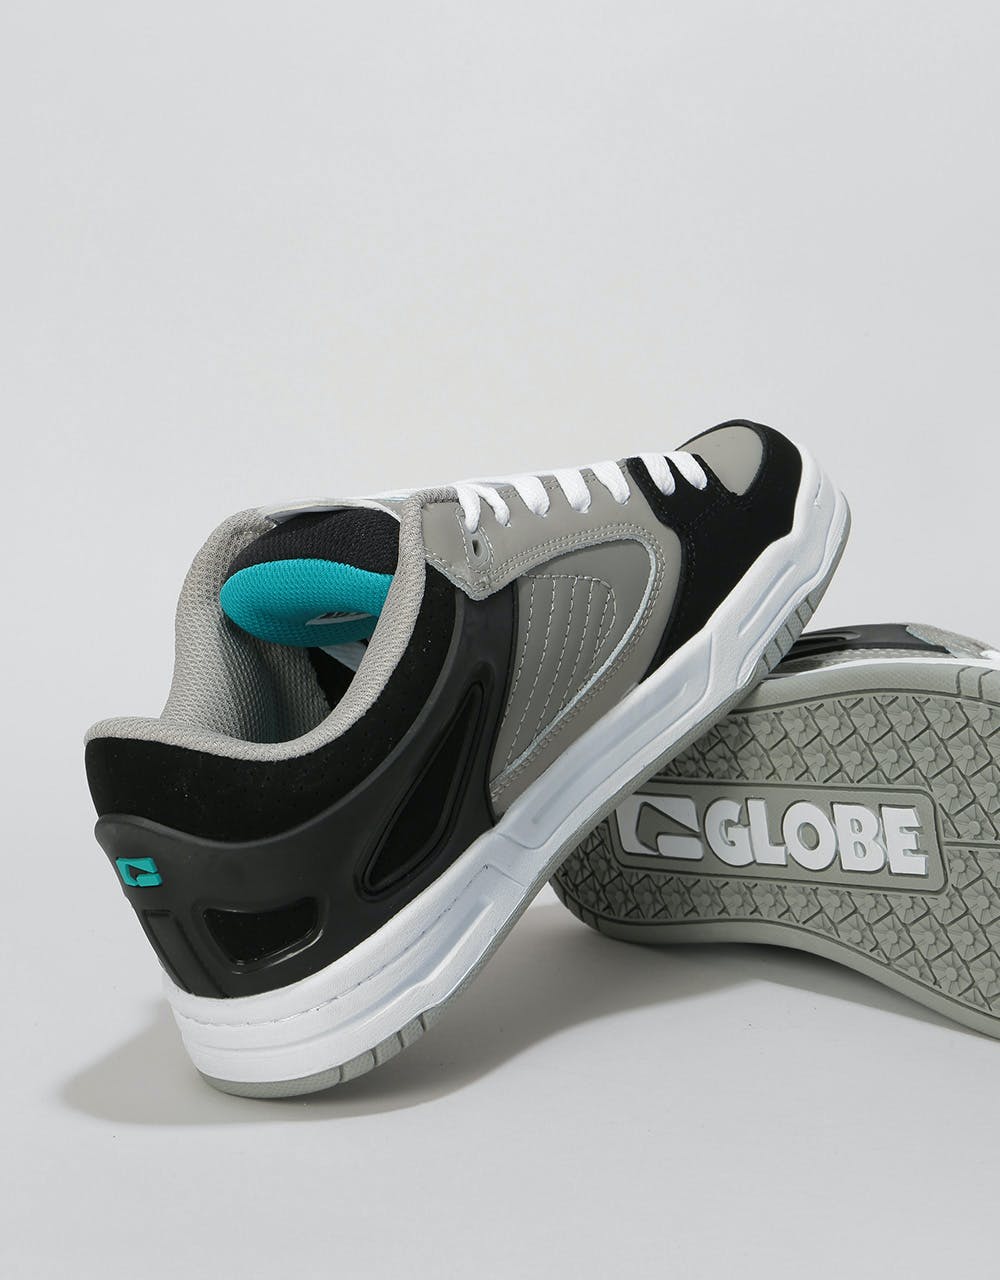 Globe Agent Skate Shoes - Black/Charcoal/Teal